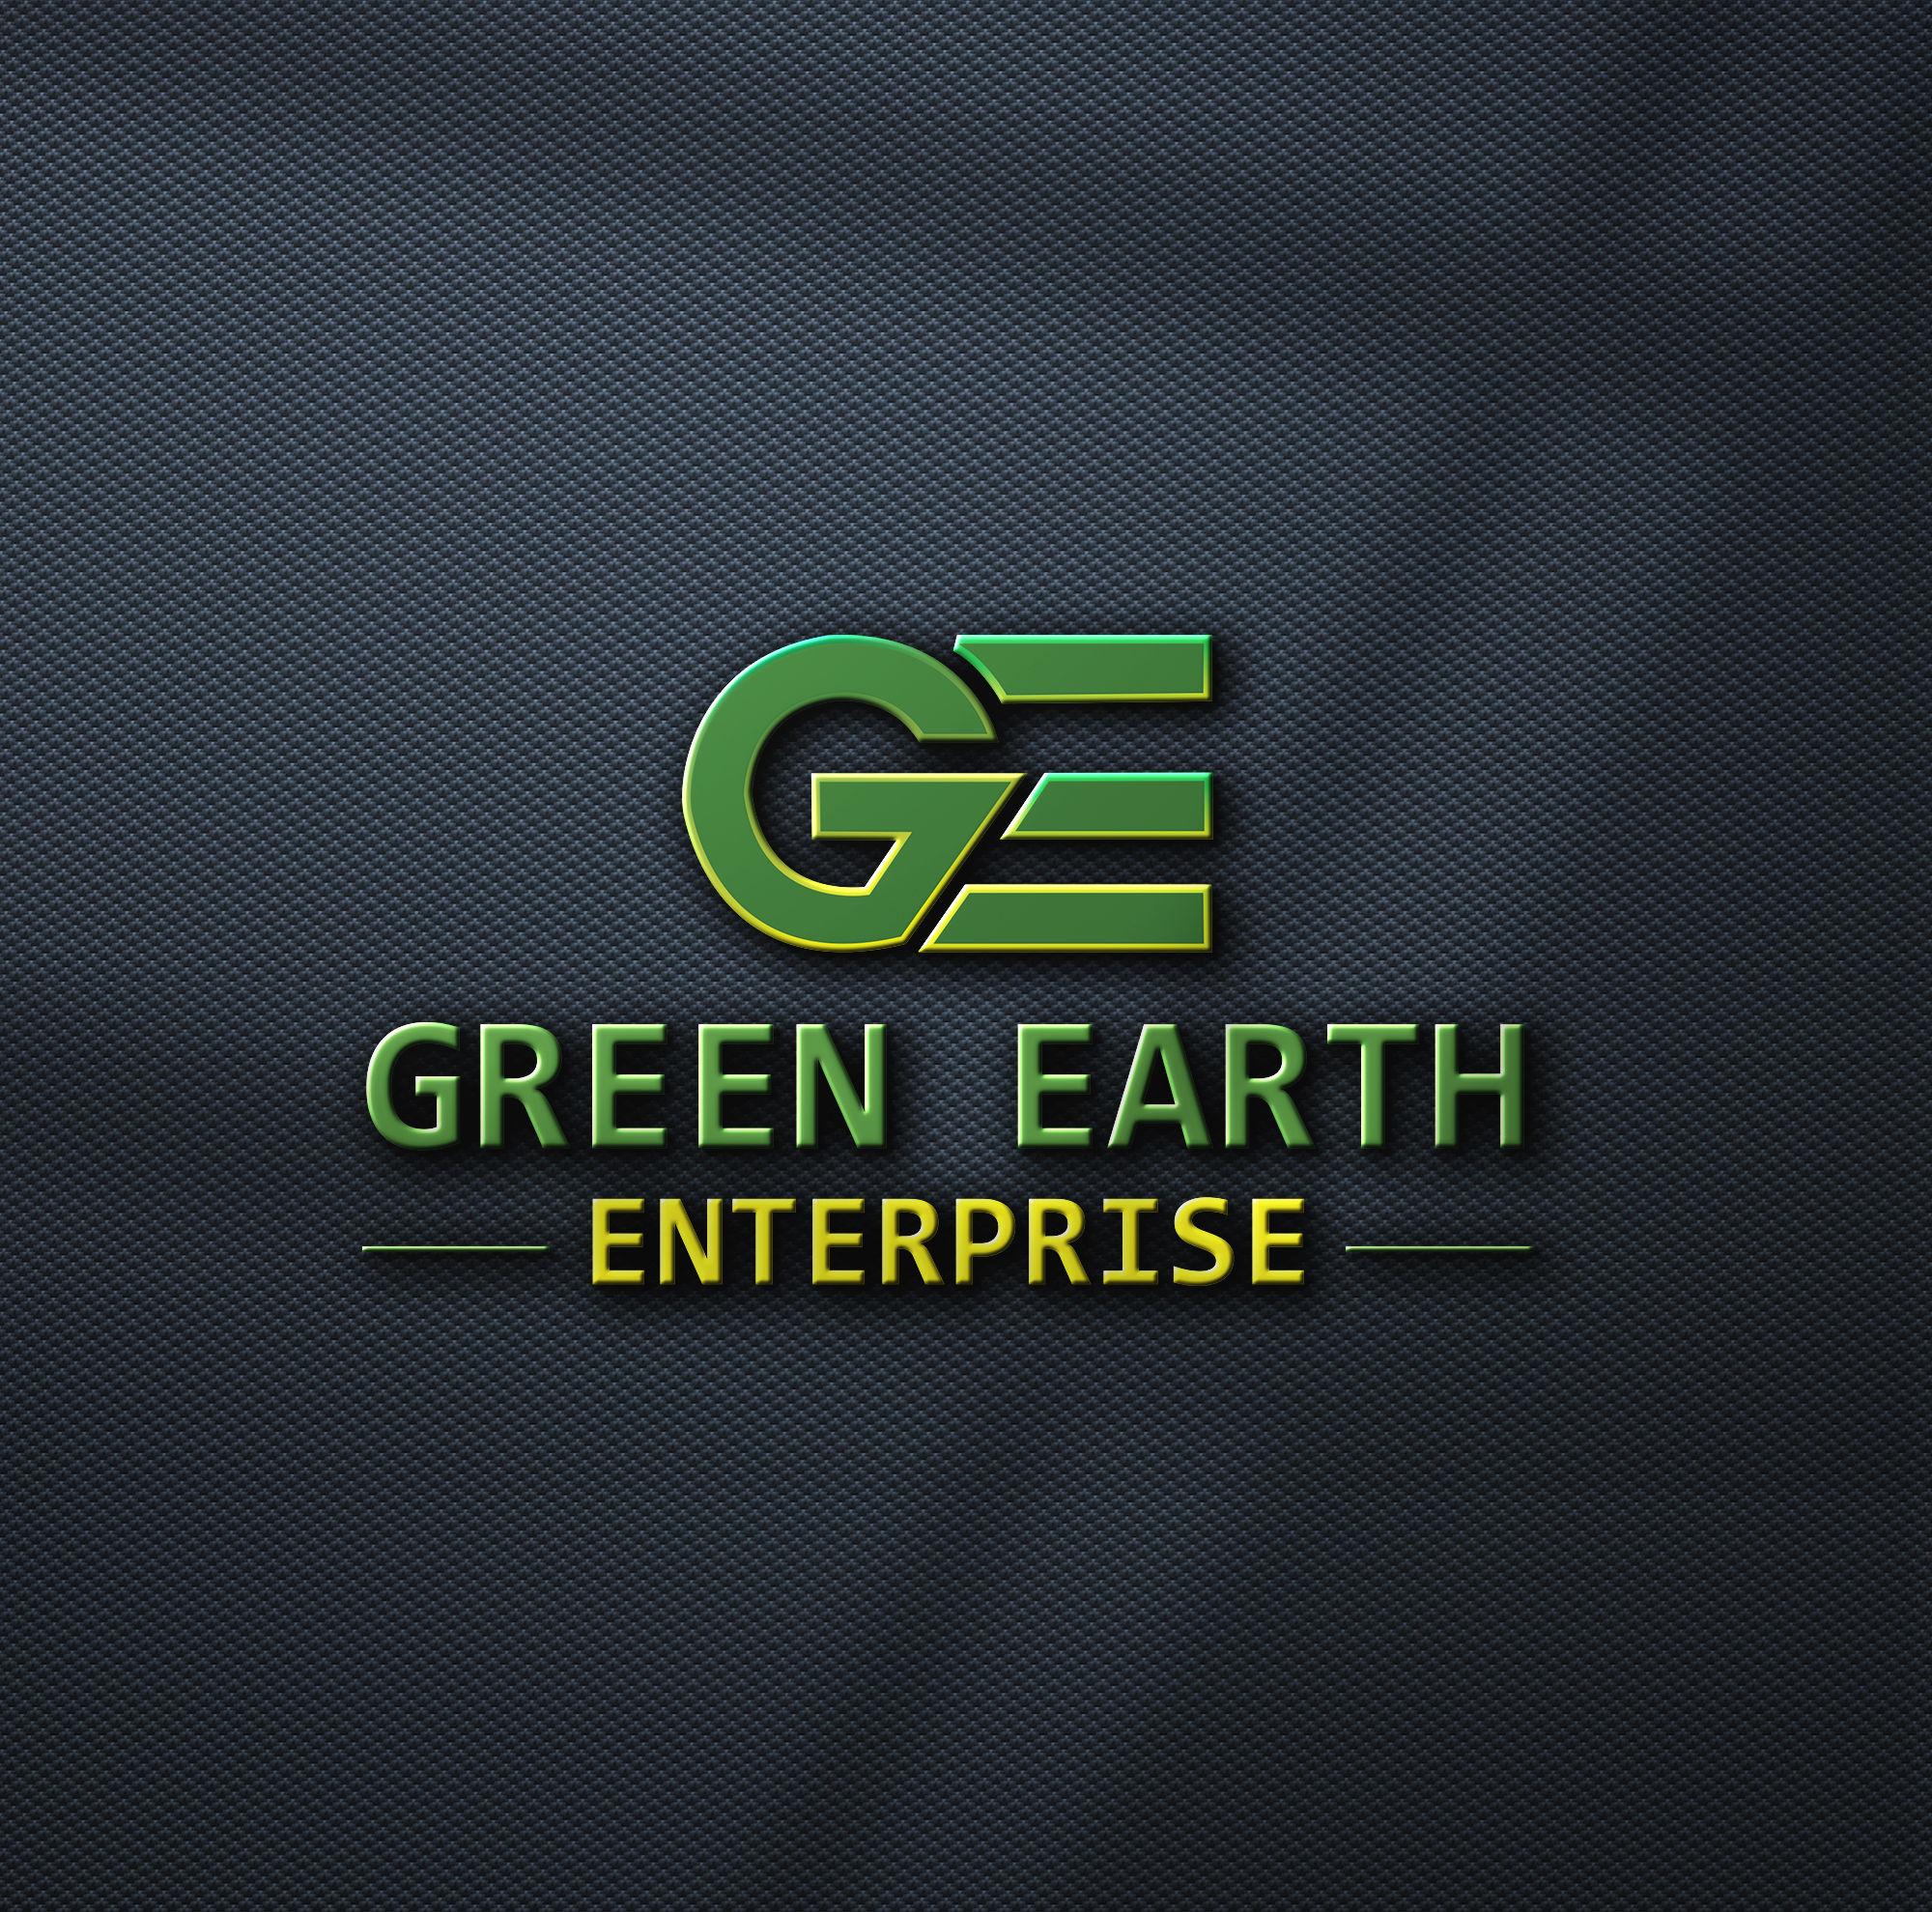 GREEN EARTH ENTERPRISE